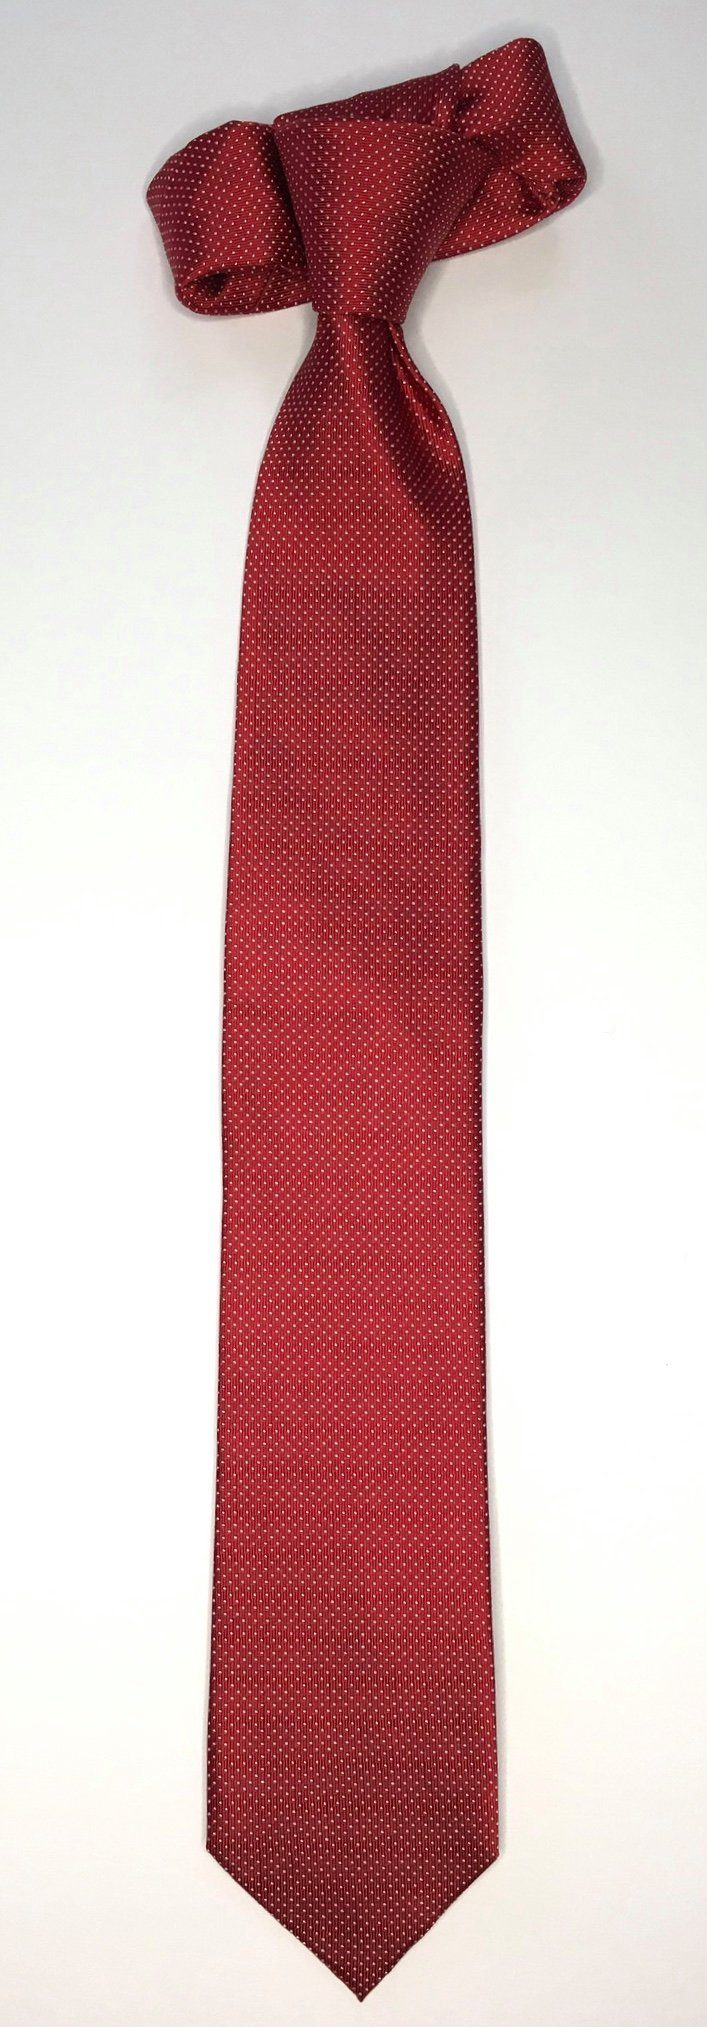 Krawatte Picoté Seidenfalter Design edlen 6cm Seidenfalter im Seidenfalter Krawatte Picoté Krawatte Rot